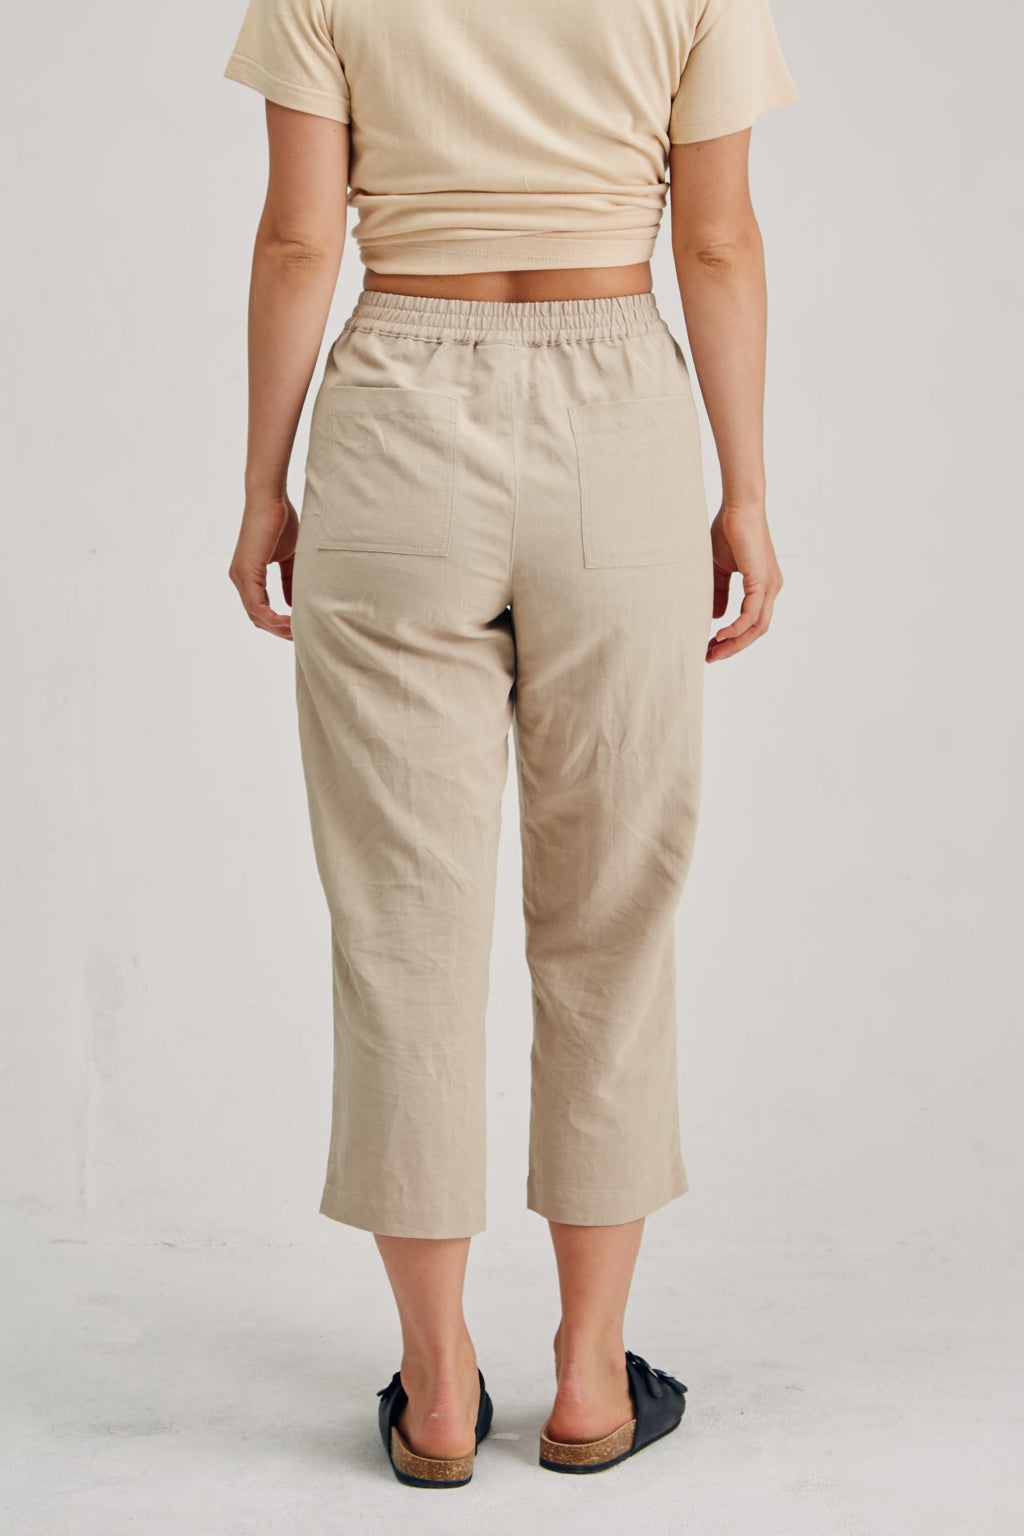 Ladies’ Hemp Cotton 7/8 Elastic Waist Pants | Oat - HempStitch.